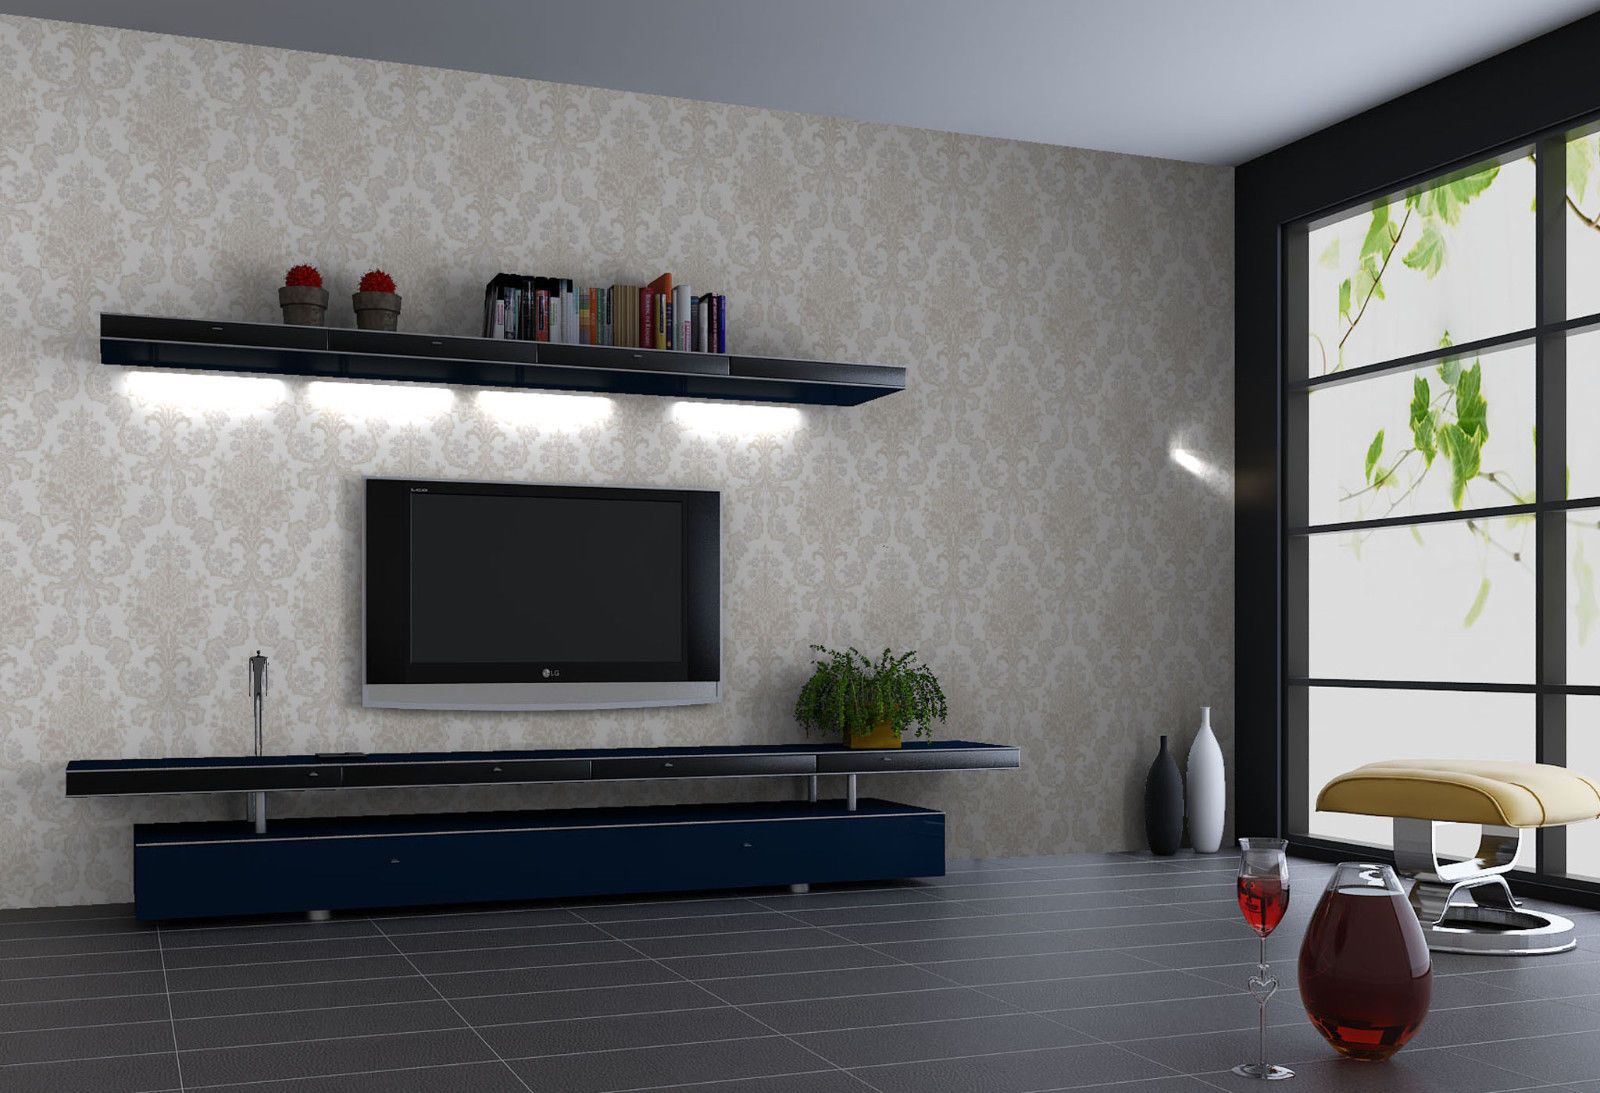 wallpaper designs for tv unit,living room,room,furniture,interior design,wall